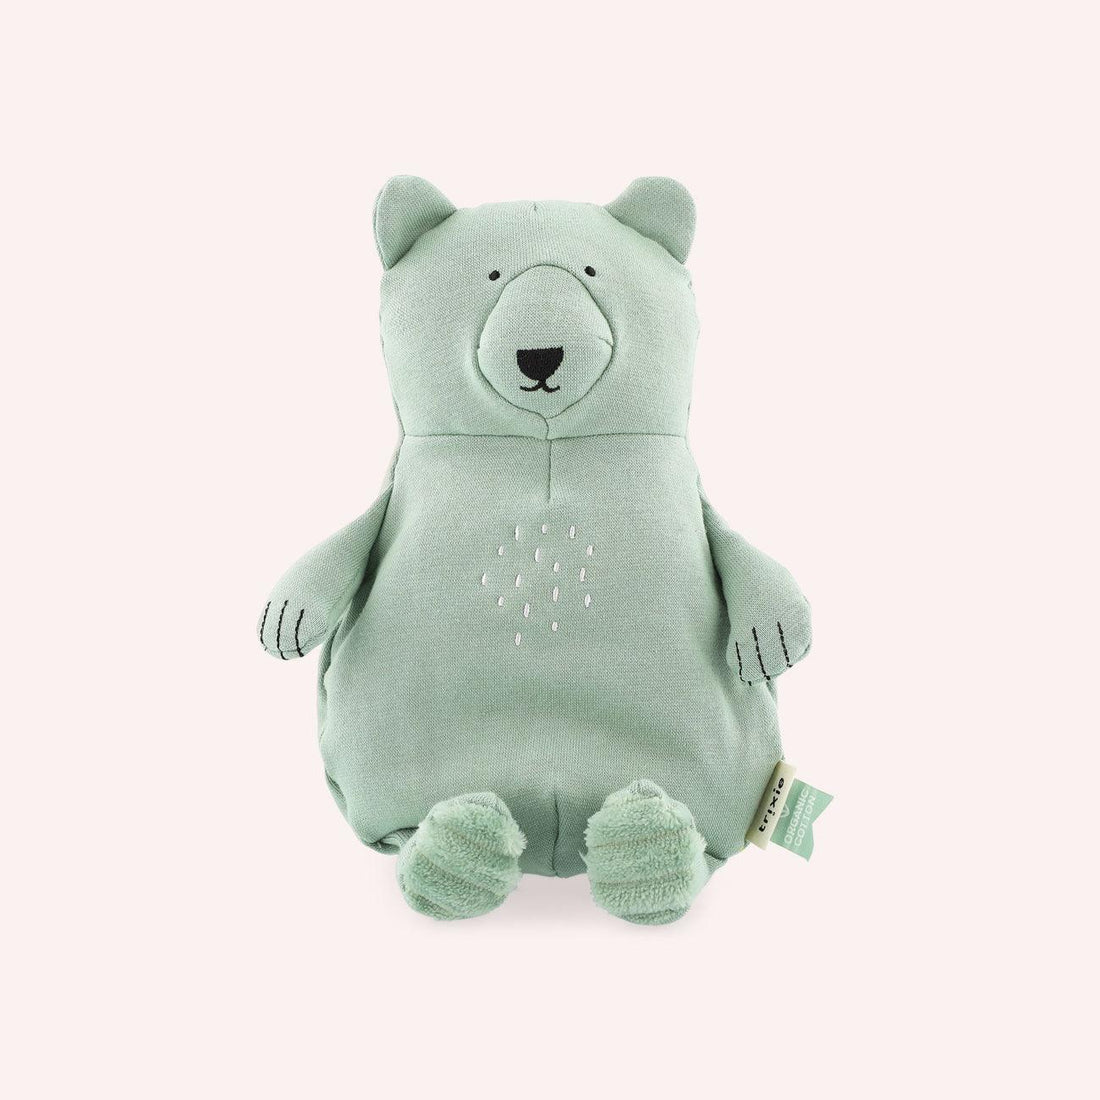 Plush Toy - Mr. Polar Bear